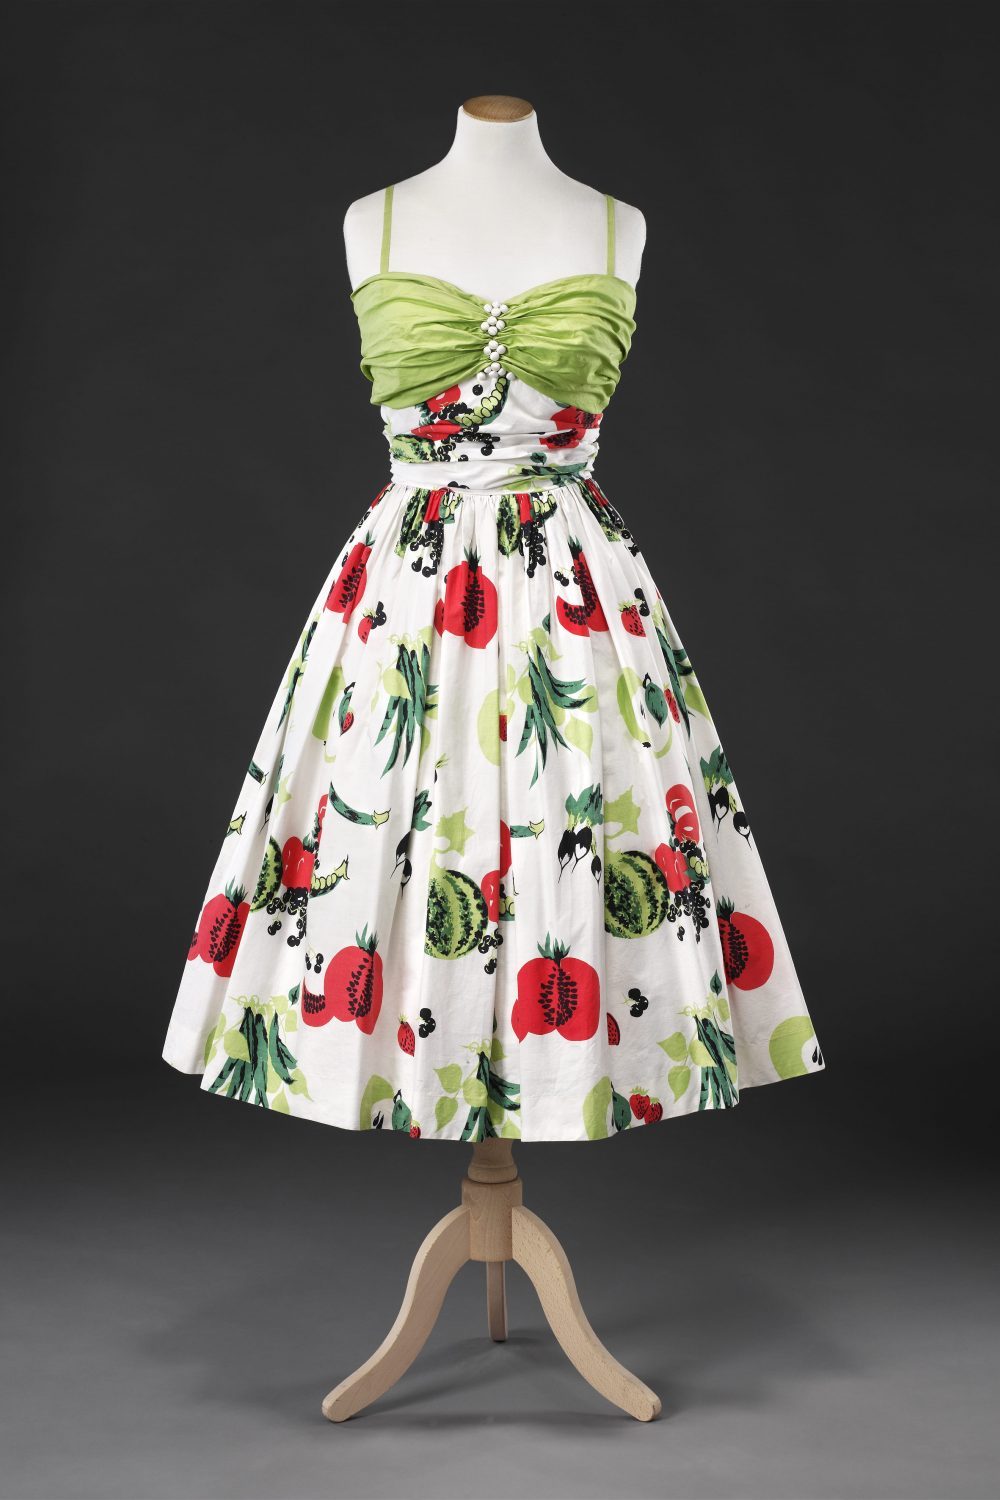 Orange Rose Print Dress by Horrockses Fashions 1950s Horrockses Dress Vintage Dress